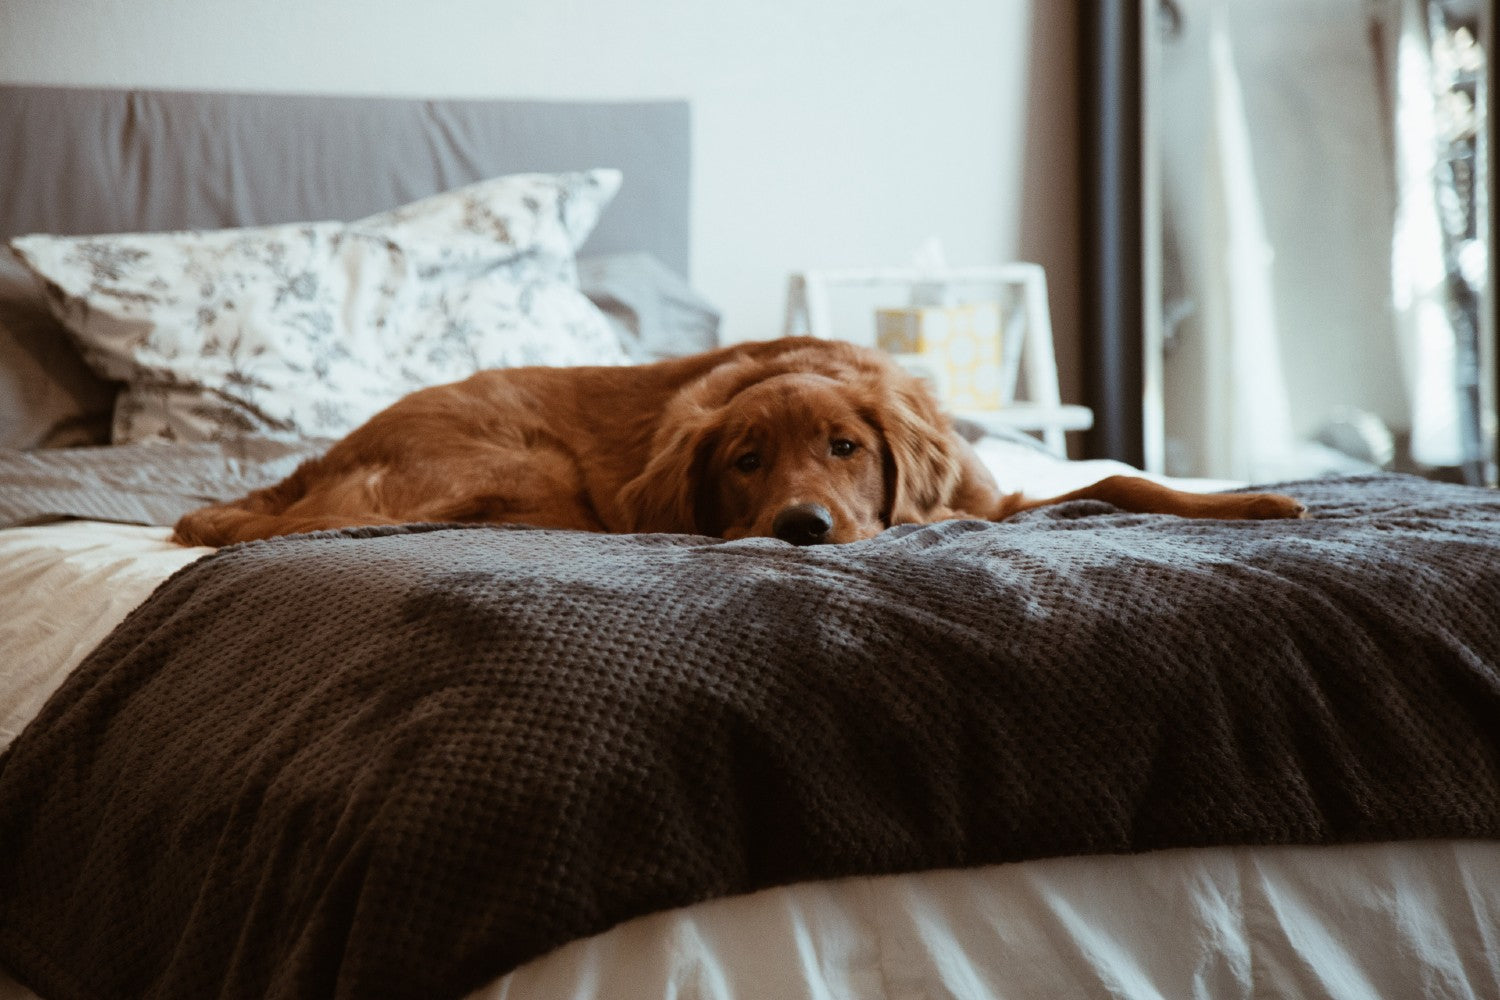 Dog Sleeping In Bed. Photo Credit: Conner Baker, Unsplash